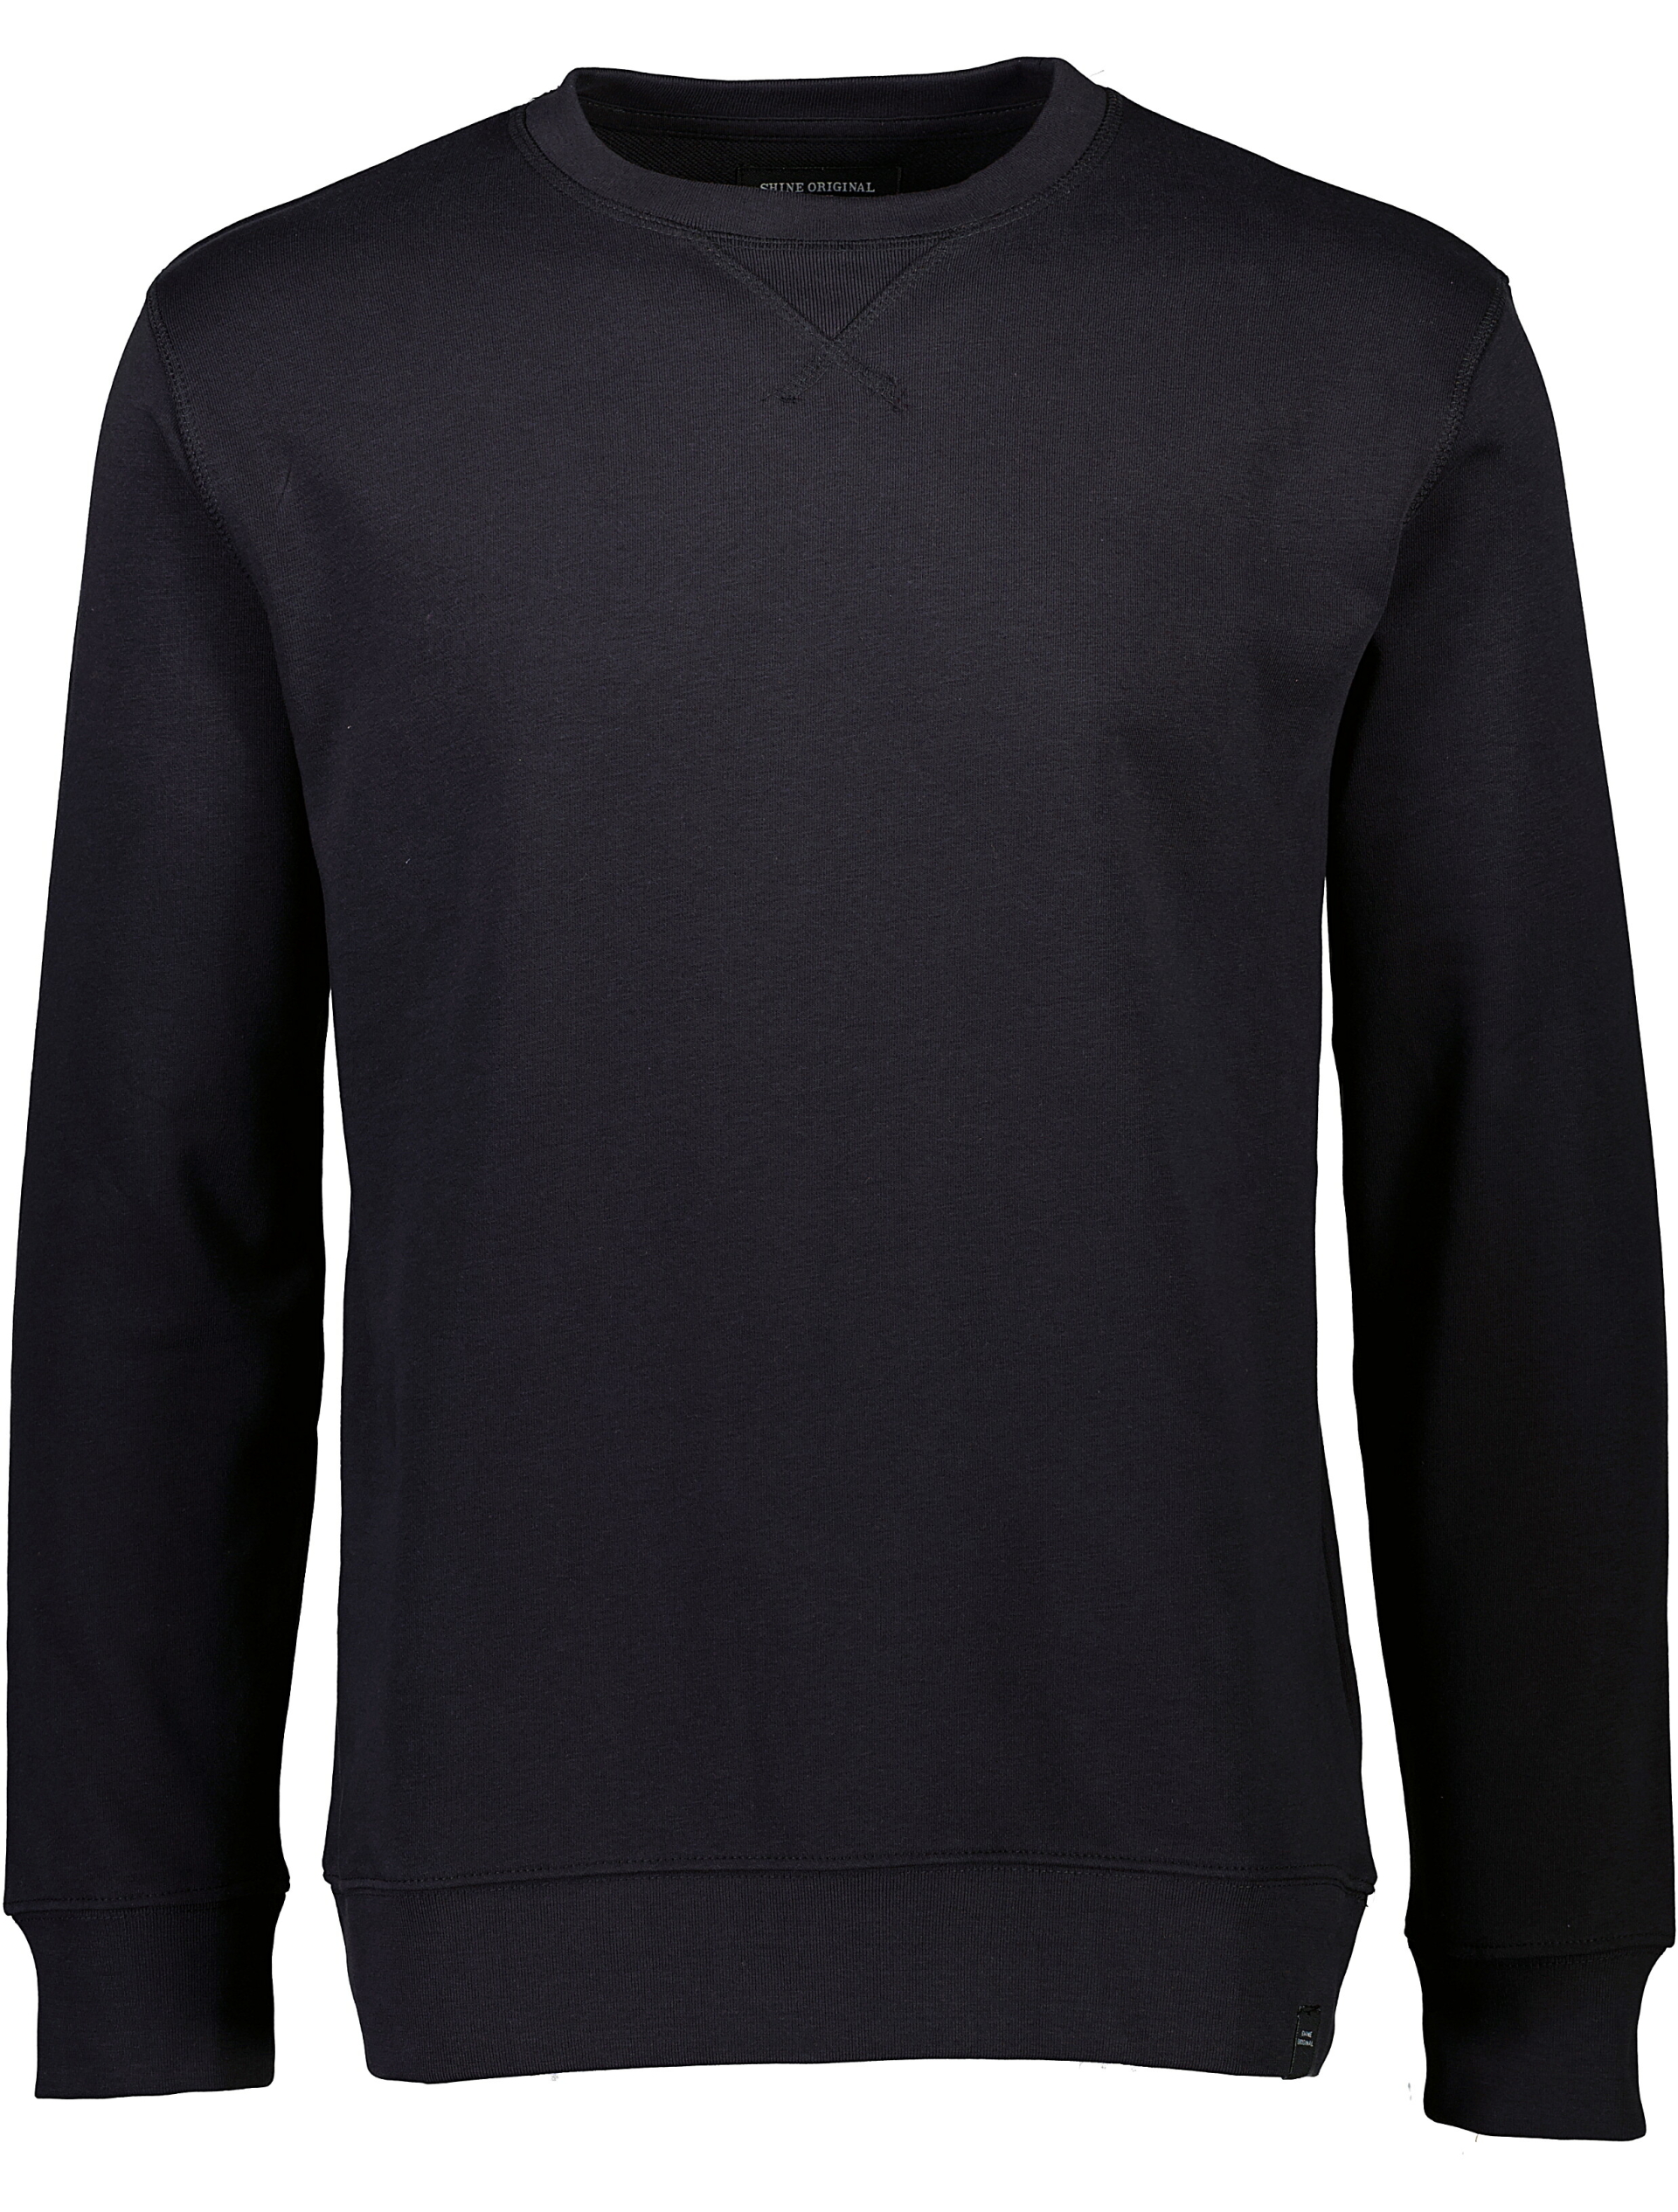 Shine Original Sweatshirt svart / black